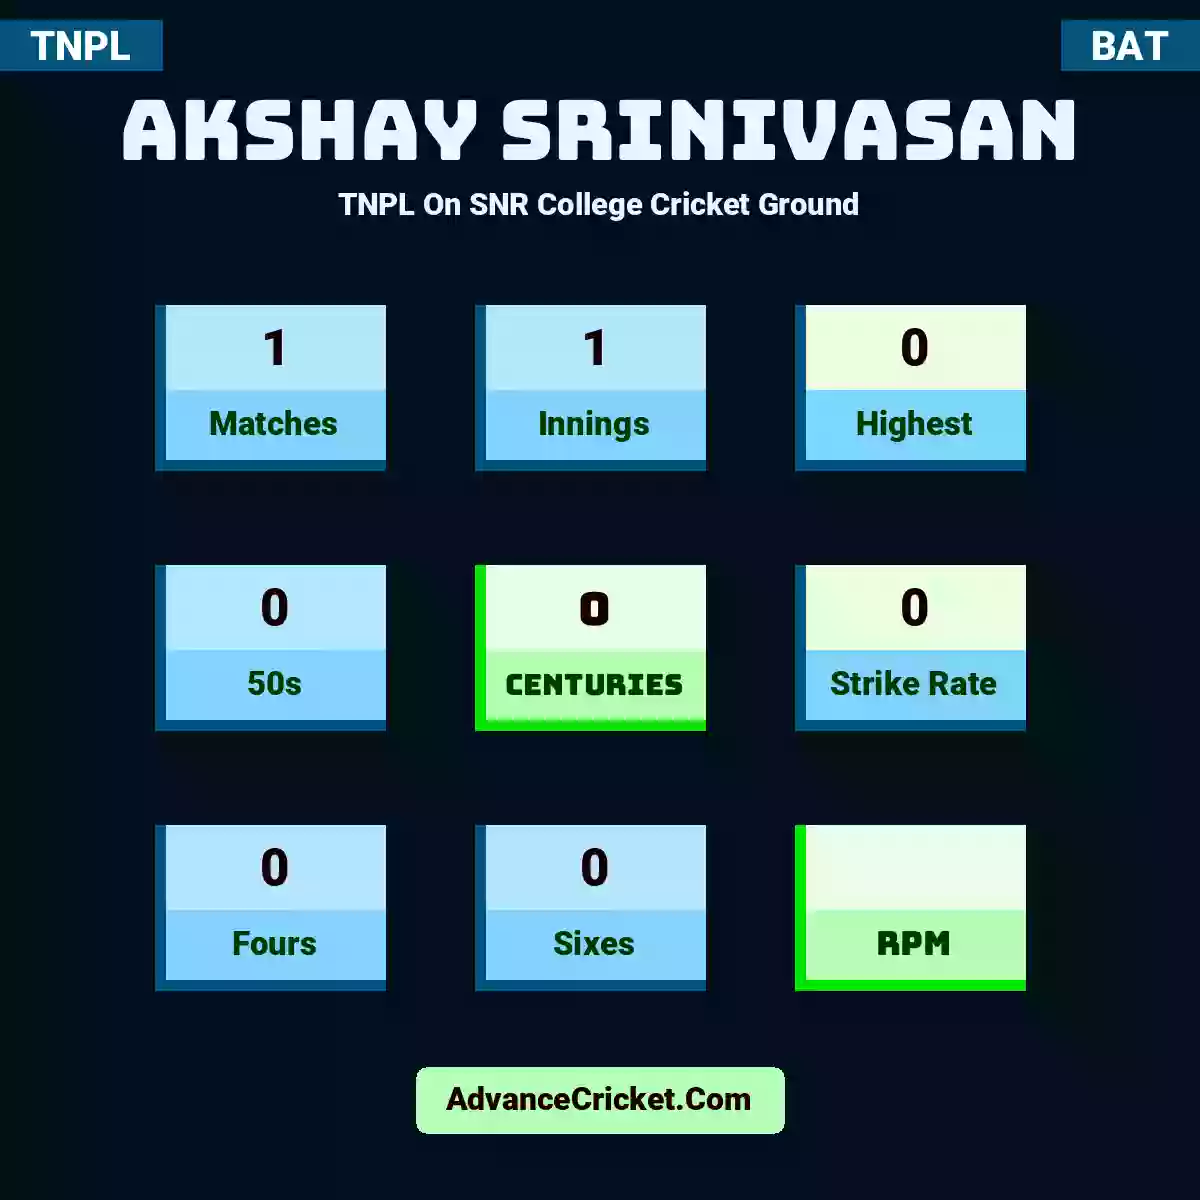 Akshay Srinivasan TNPL  On SNR College Cricket Ground, Akshay Srinivasan played 1 matches, scored 0 runs as highest, 0 half-centuries, and 0 centuries, with a strike rate of 0. A.Srinivasan hit 0 fours and 0 sixes.